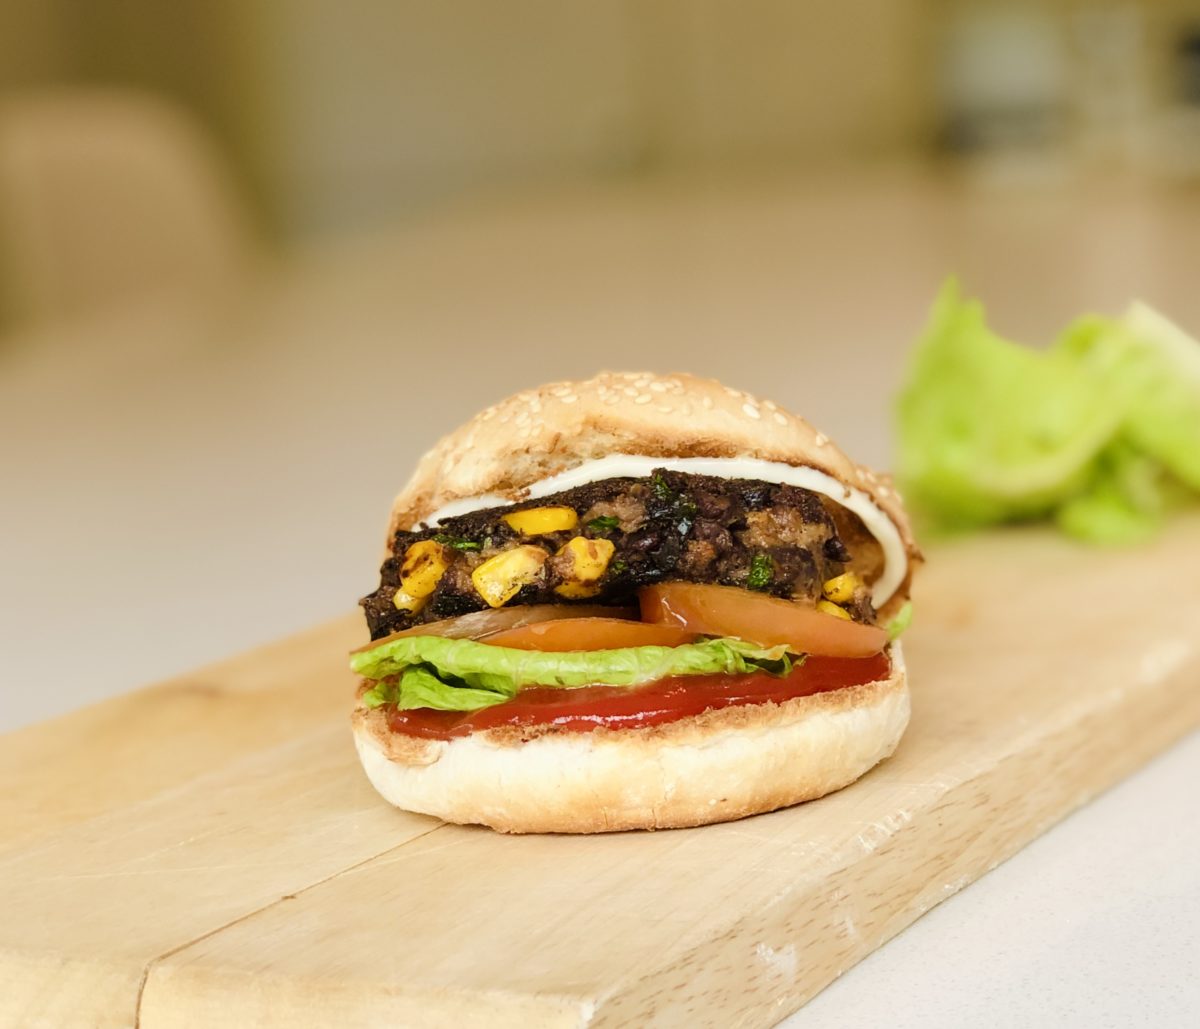 WEDNESDAY 29TH APRIL – Homemade vegan burgers